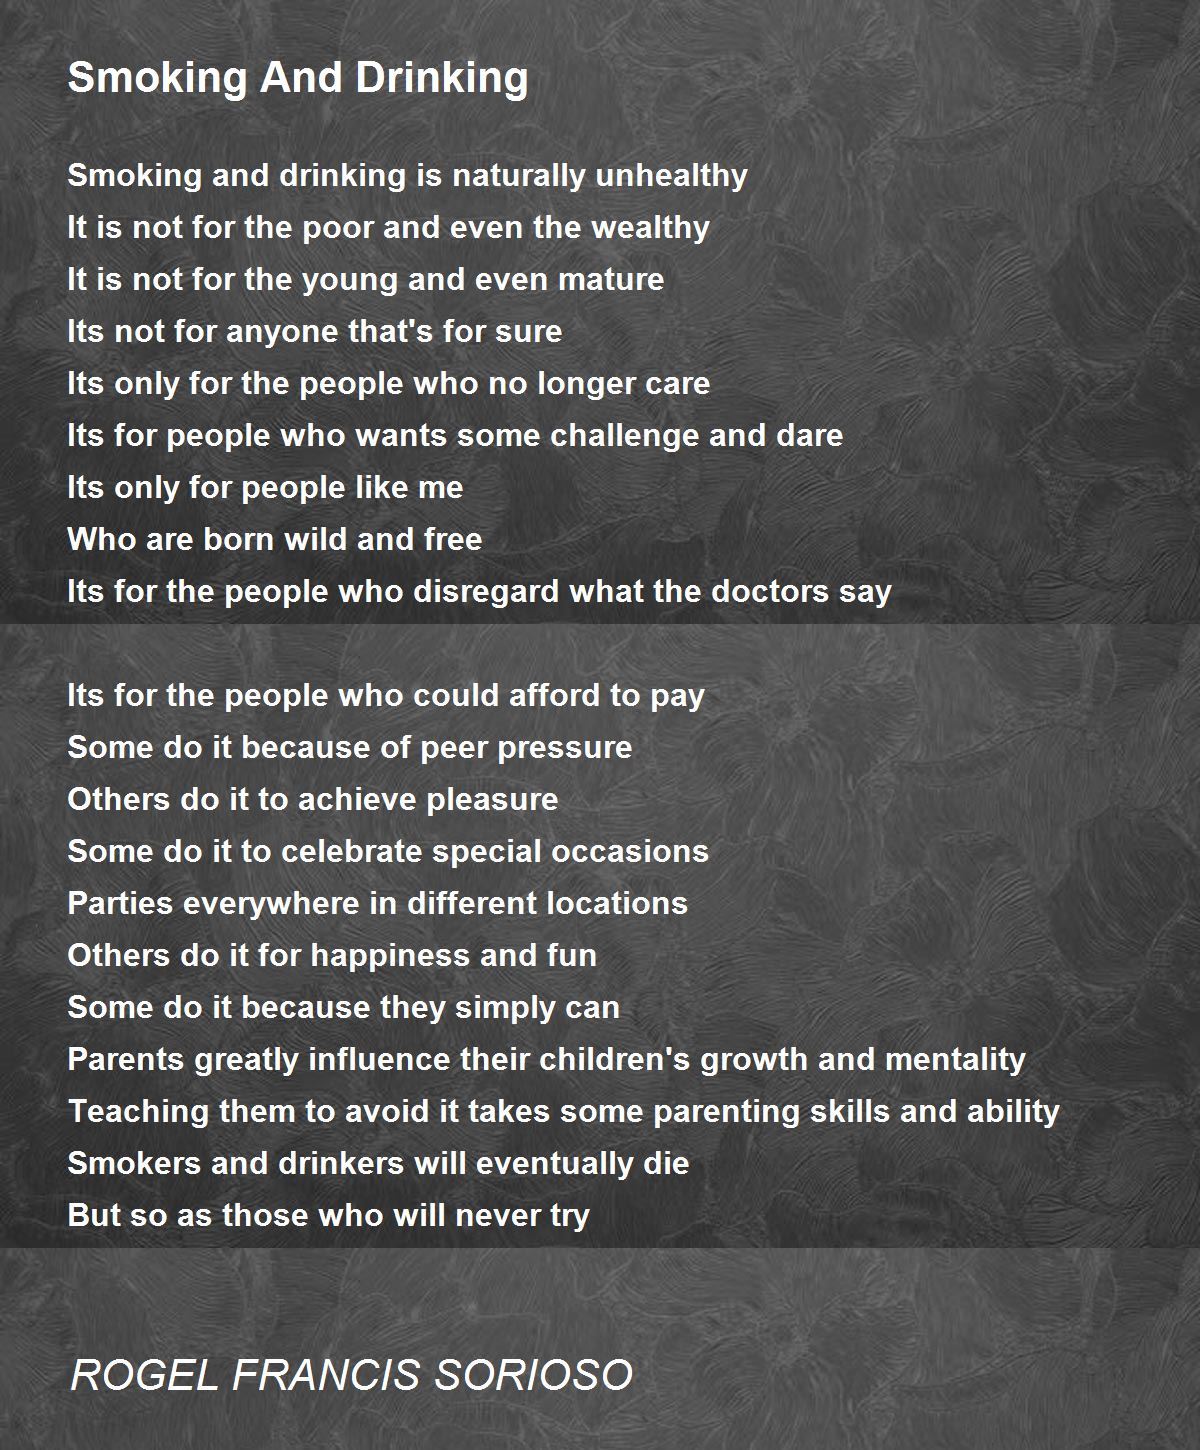 Smoking And Drinking - Smoking And Drinking Poem by ROGEL FRANCIS SORIOSO